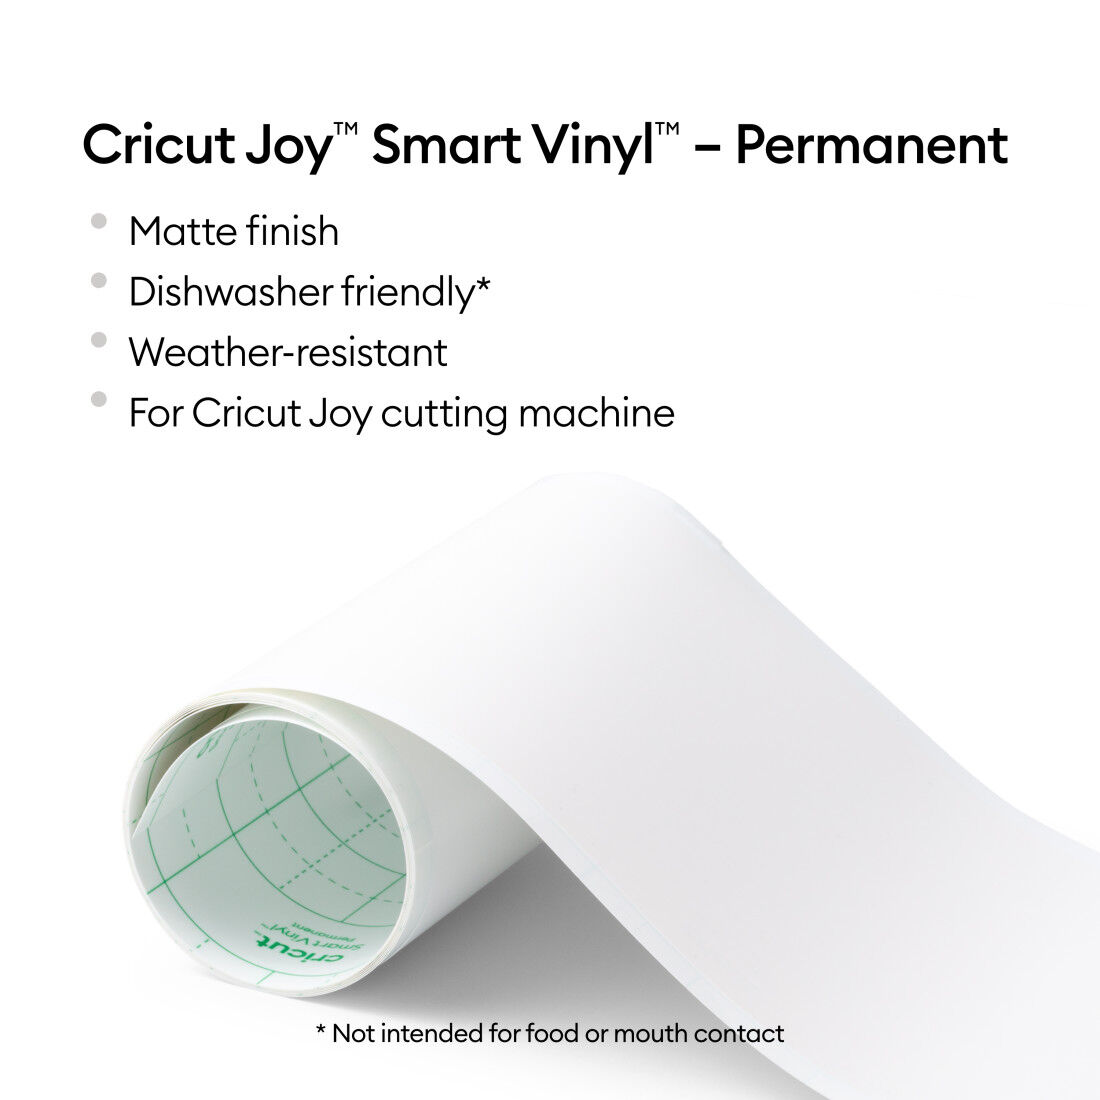 Cricut Joy Machine with Insert Cards and Smart Vinyl Bundle for